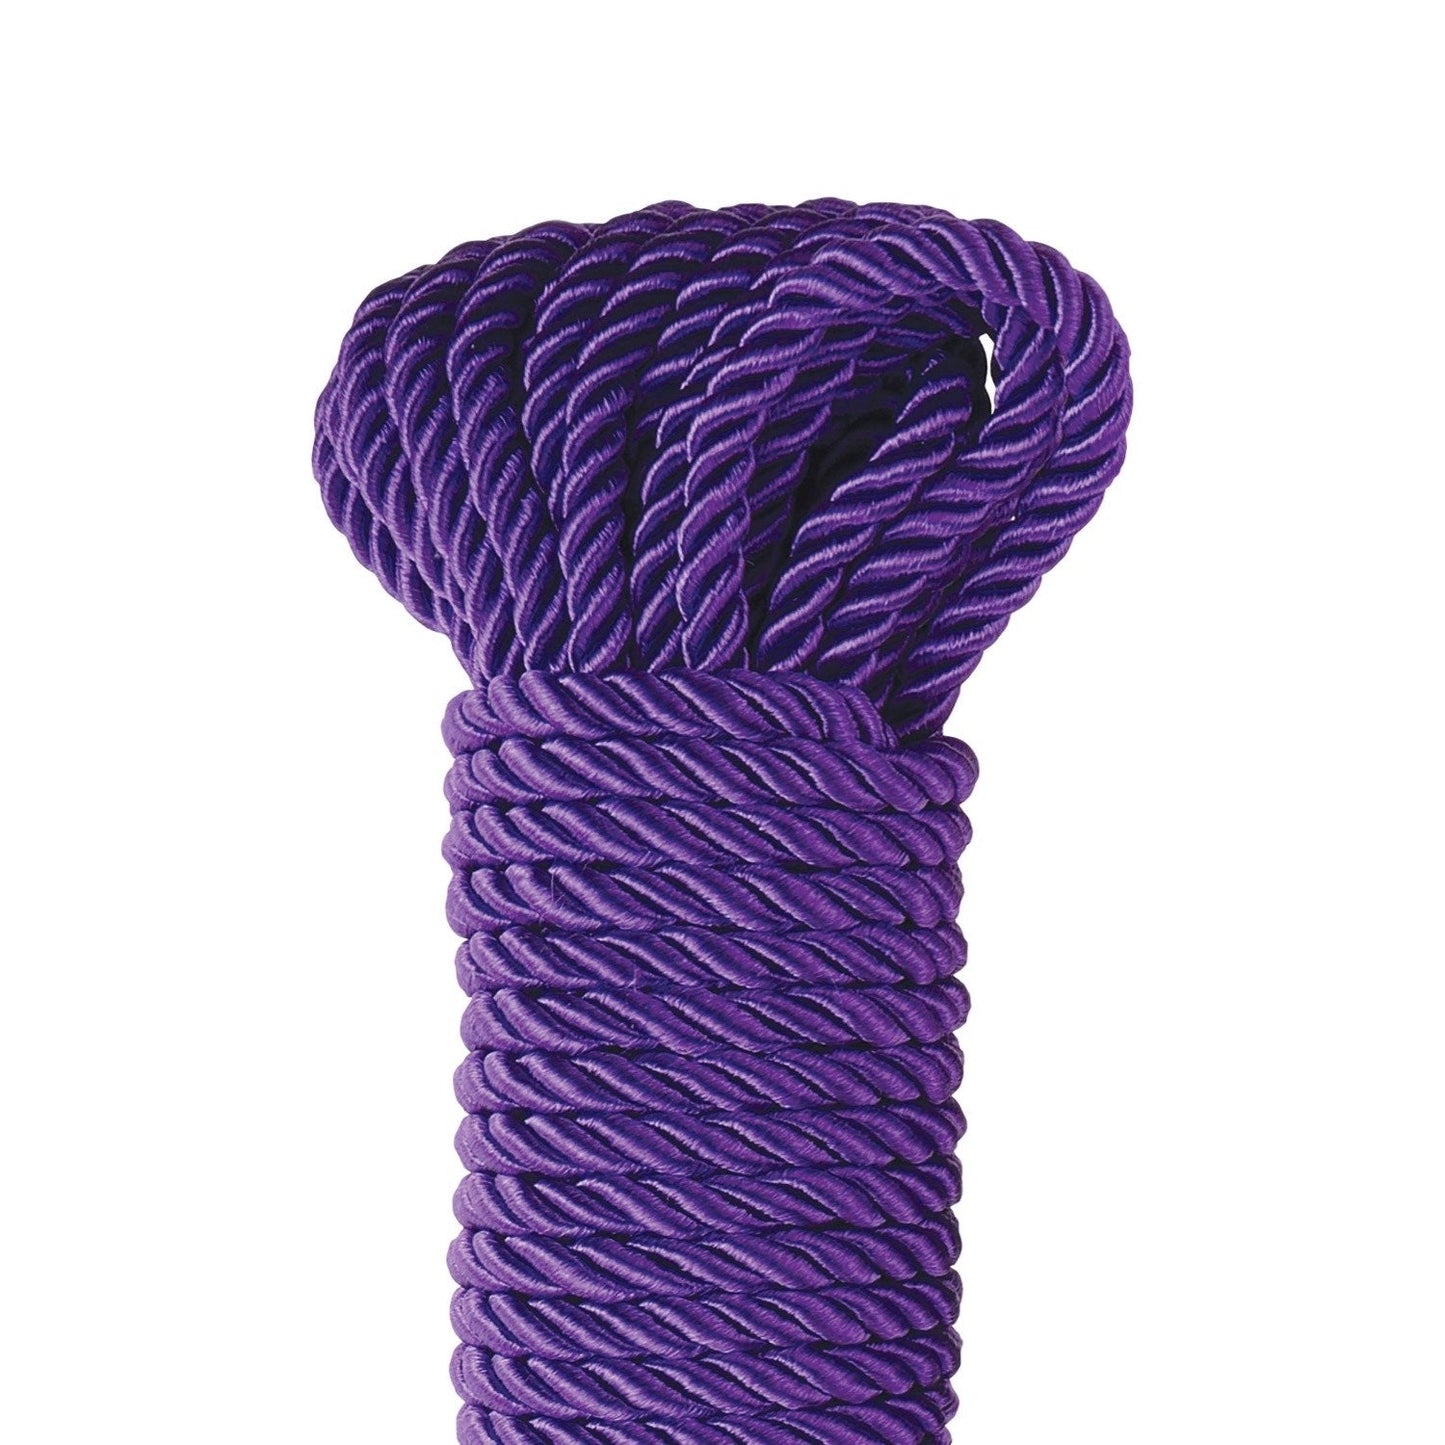 Deluxe Silky Rope - Purple Bondage Rope - 9.75 m Length